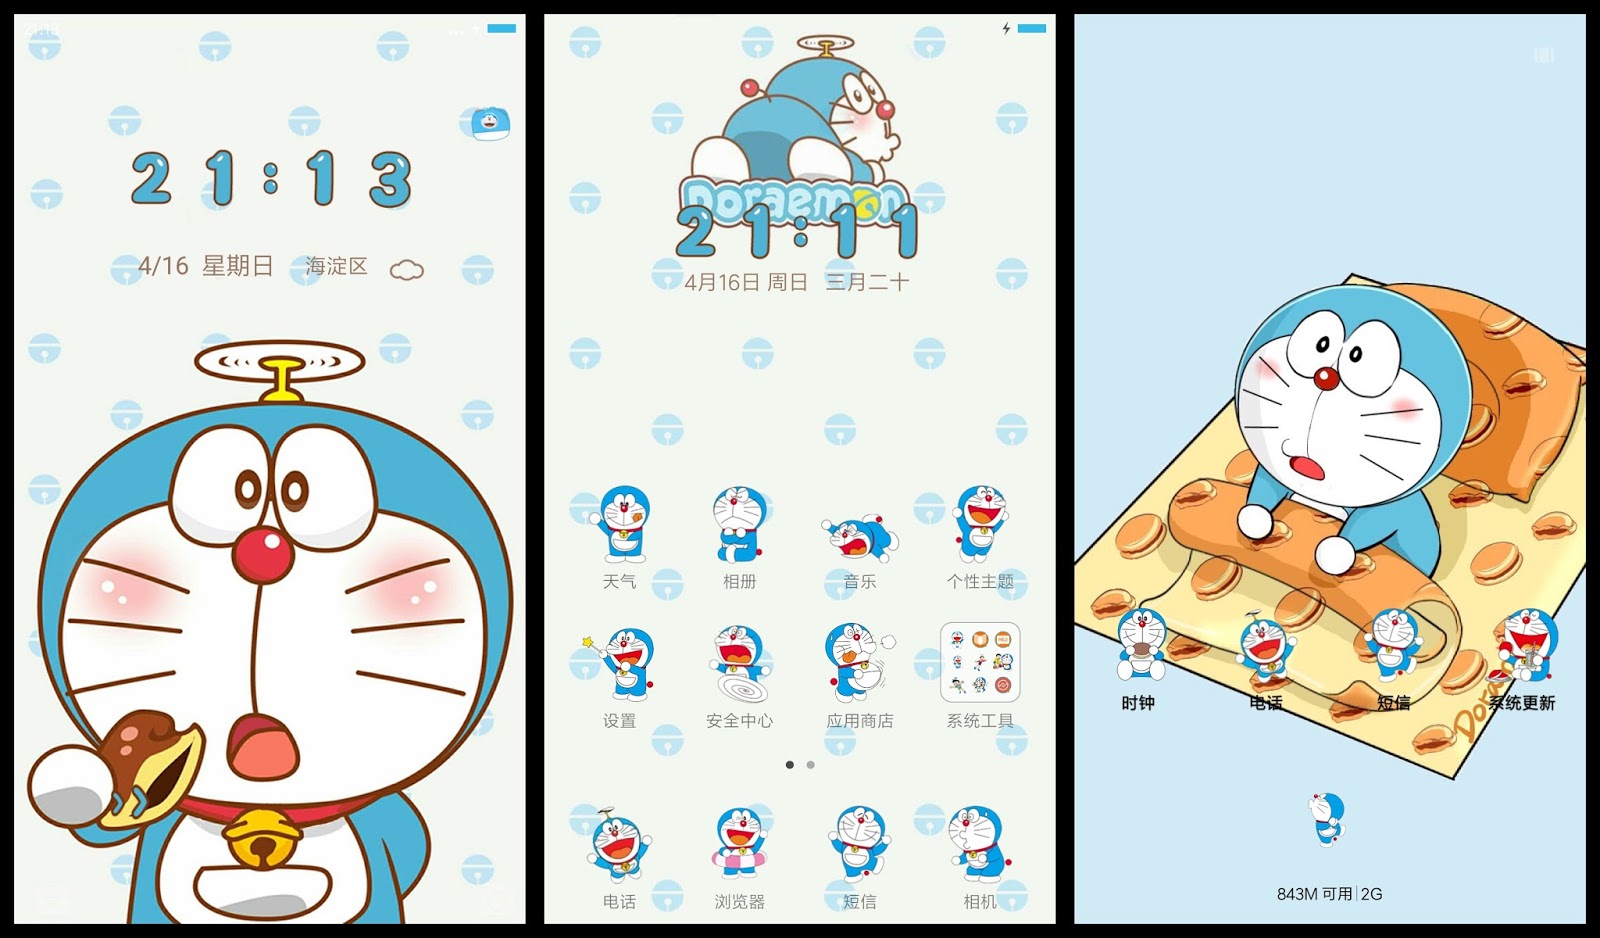 25 Tema Doraemon Android Terbaru Untuk Oppo Xiaomi Samsung